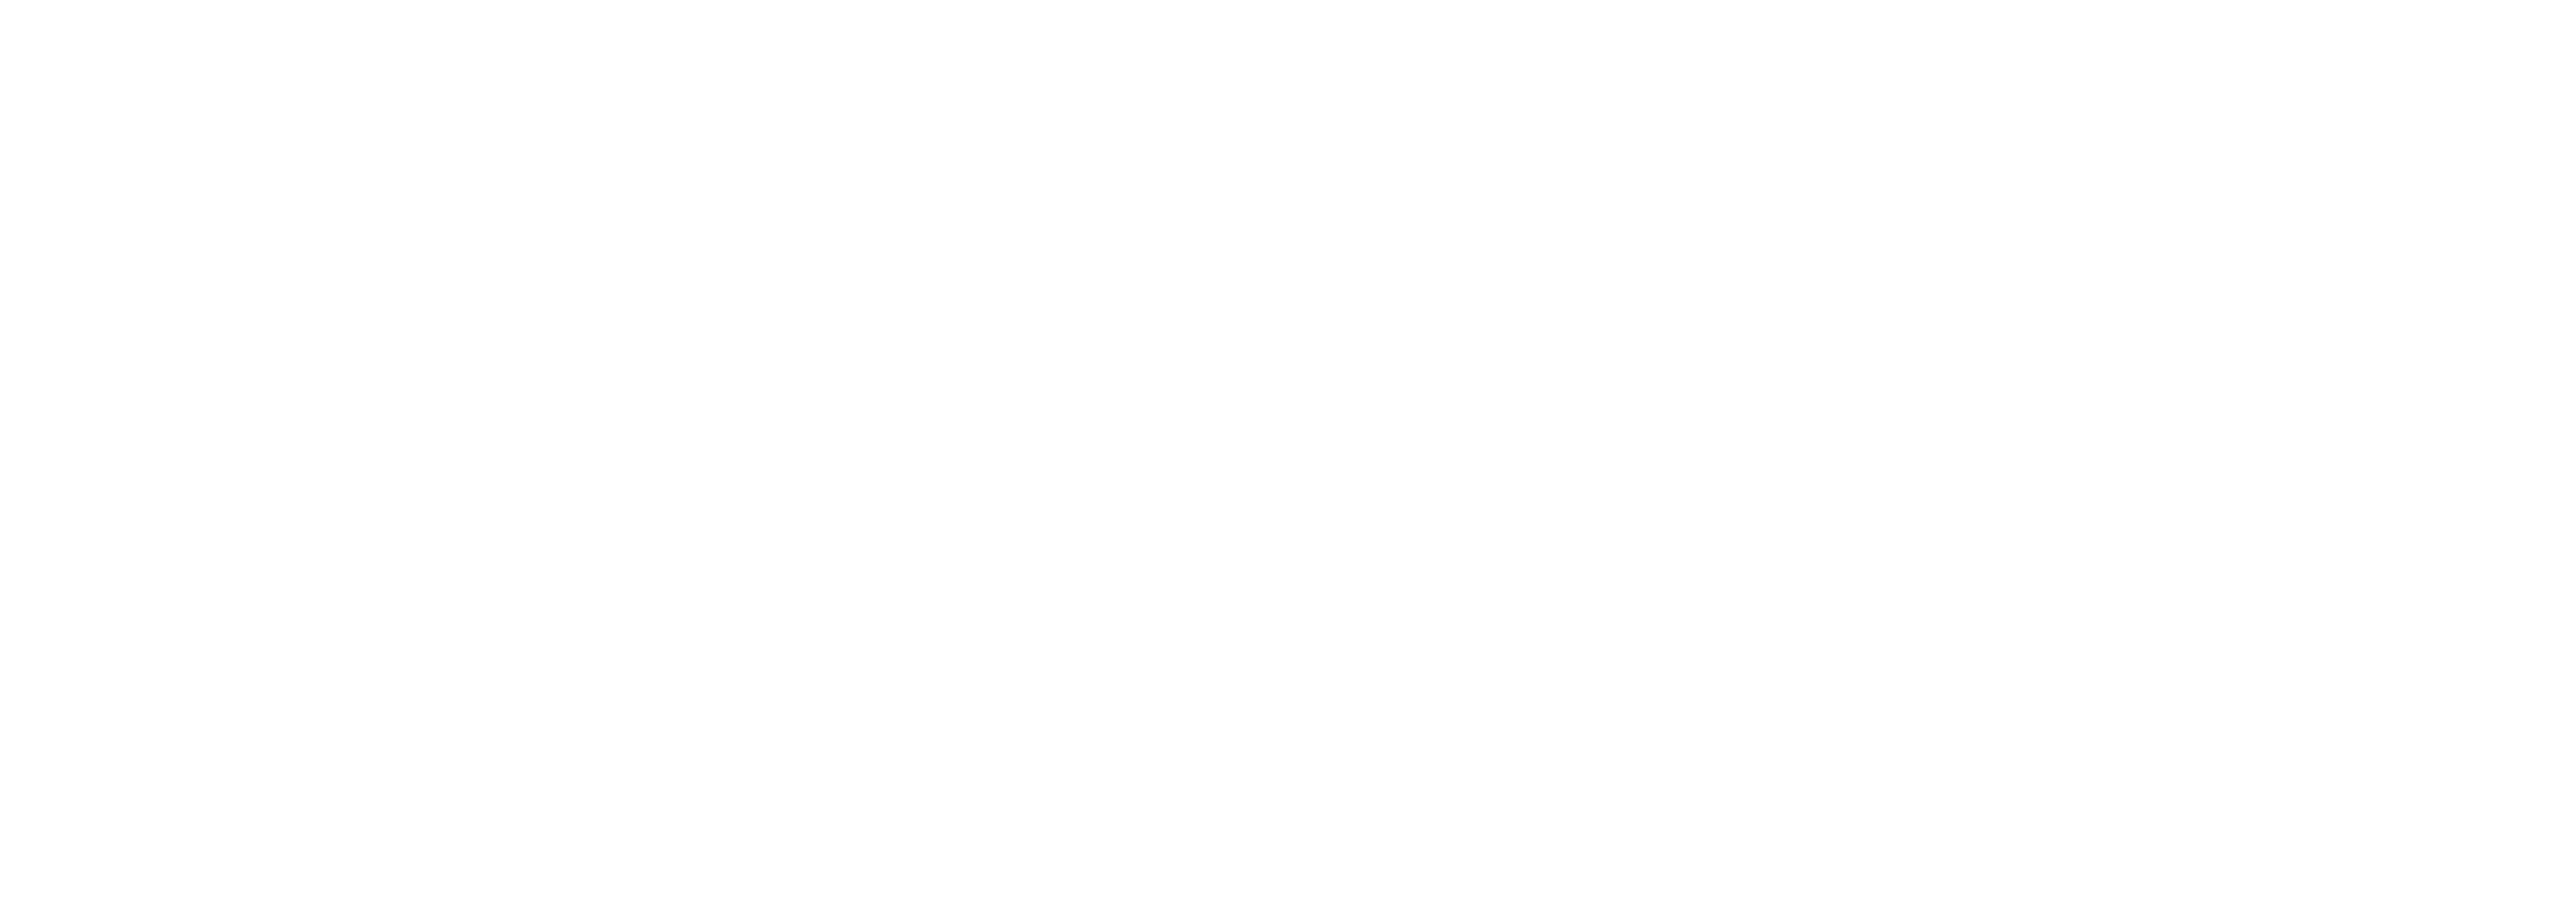 Jesus Christ Encounters